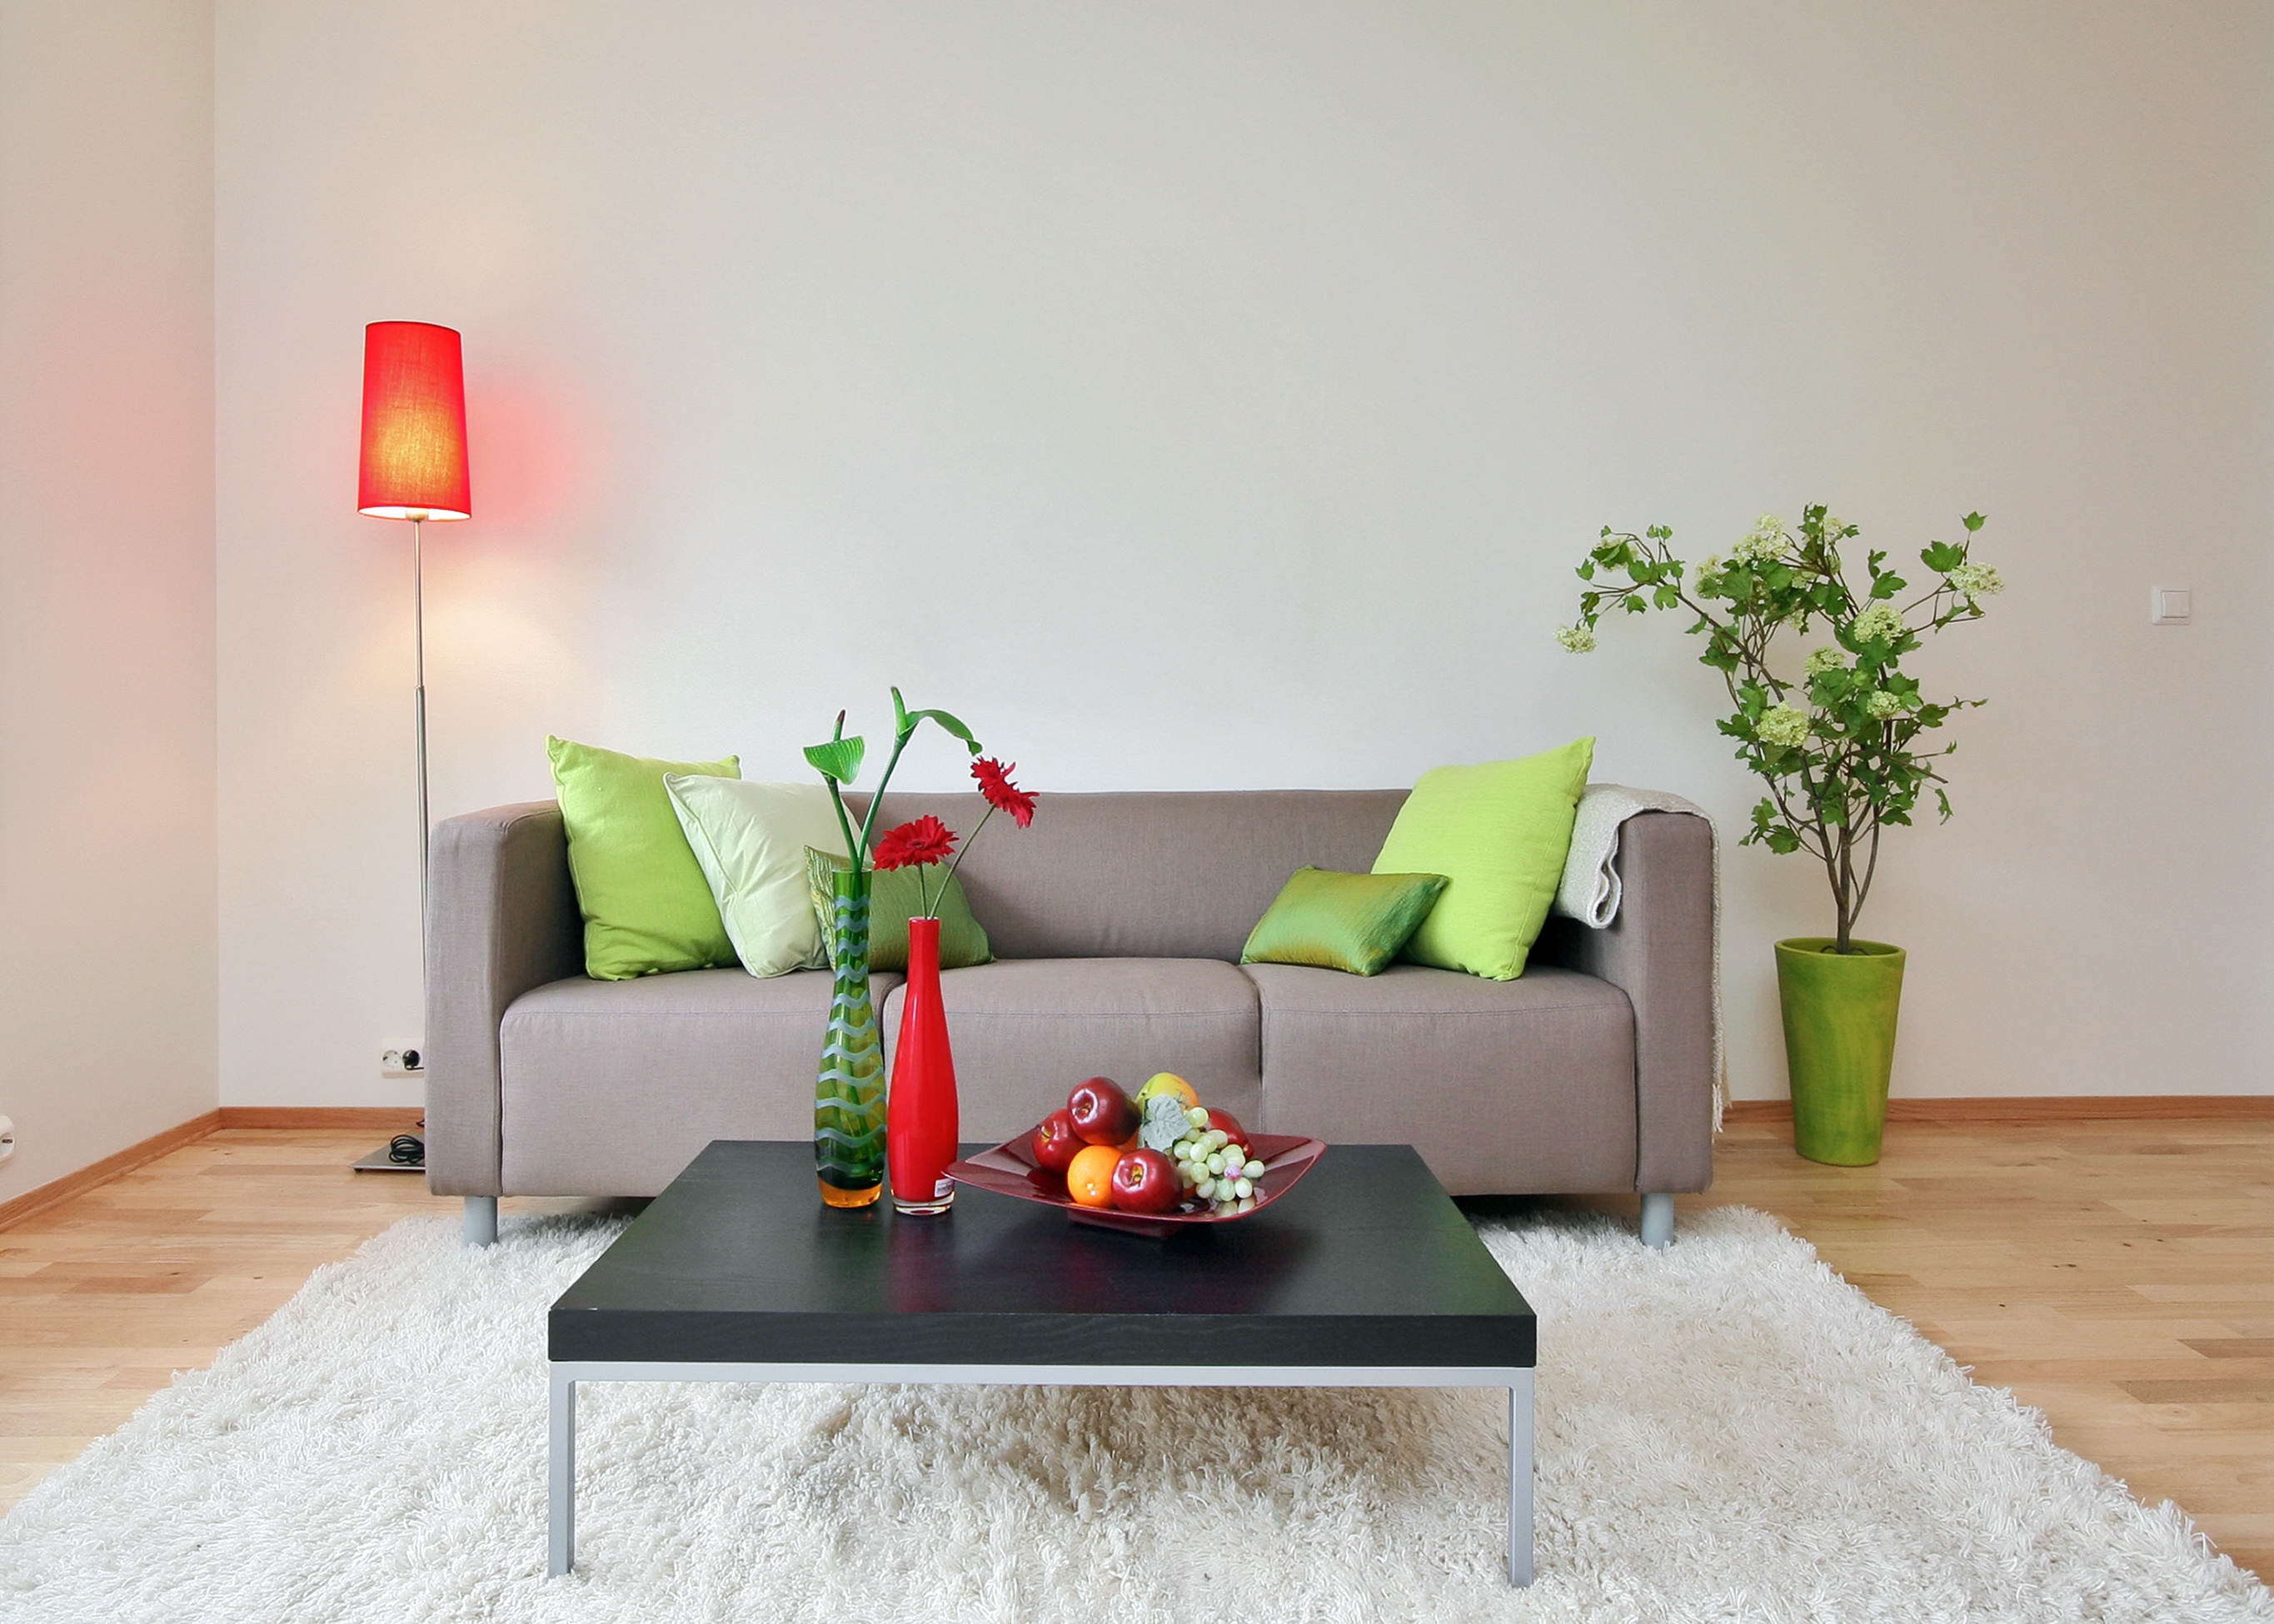 table, fruits, flowers, miscellanea, miscellaneous, living room, carpet